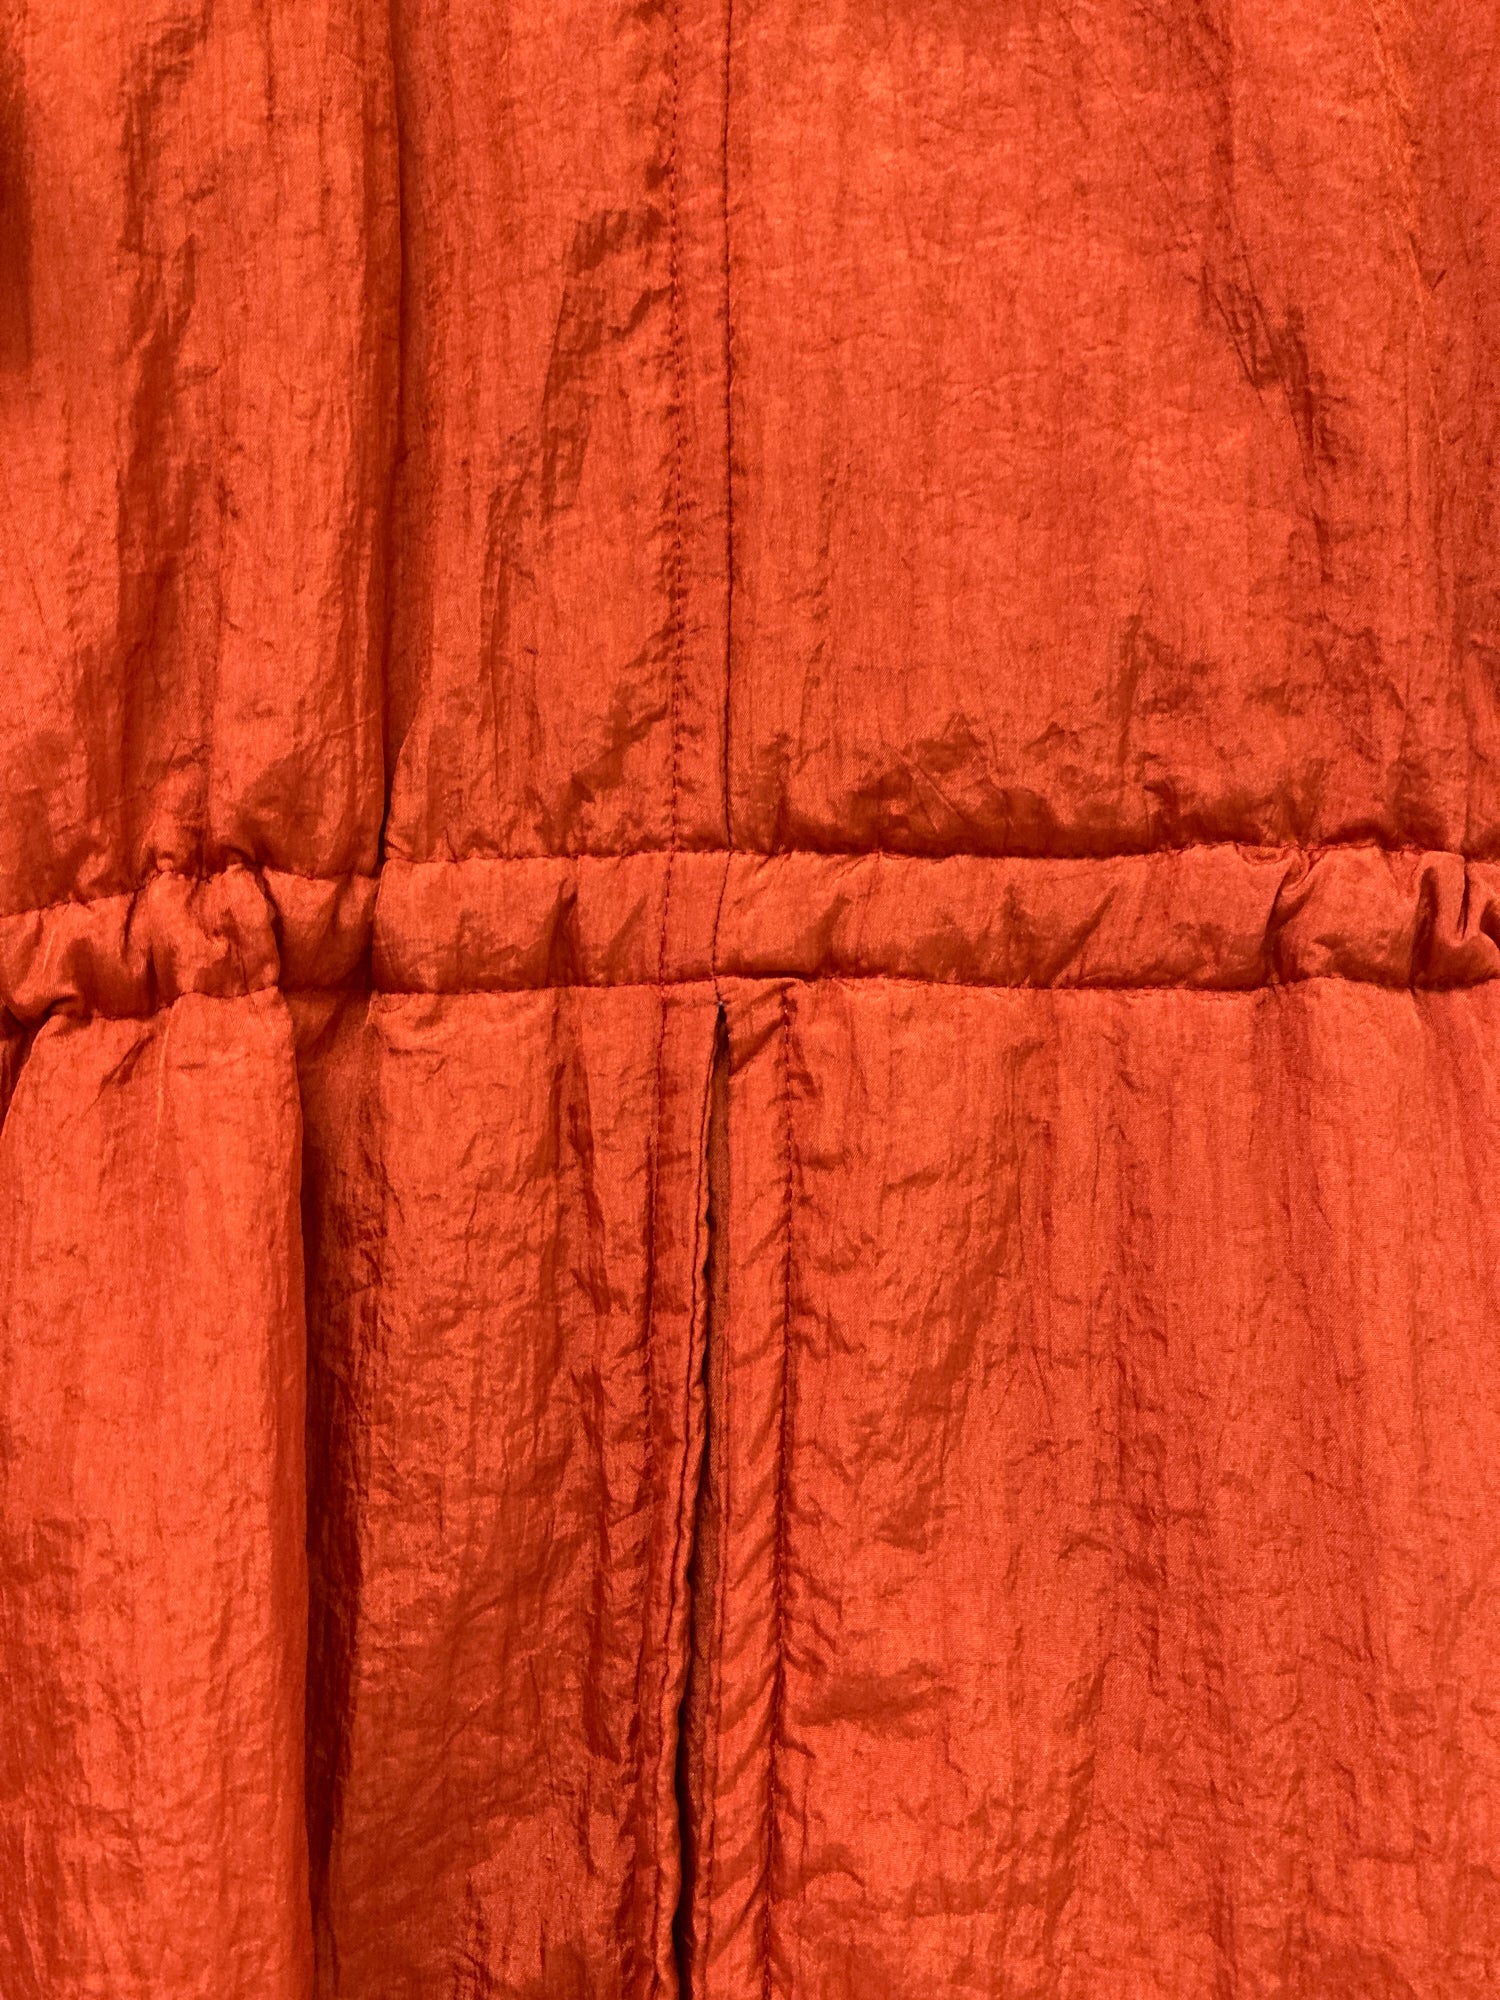 Windcoat Issey Miyake 1980s-90s burnt orange creased polyester hood coat - S M